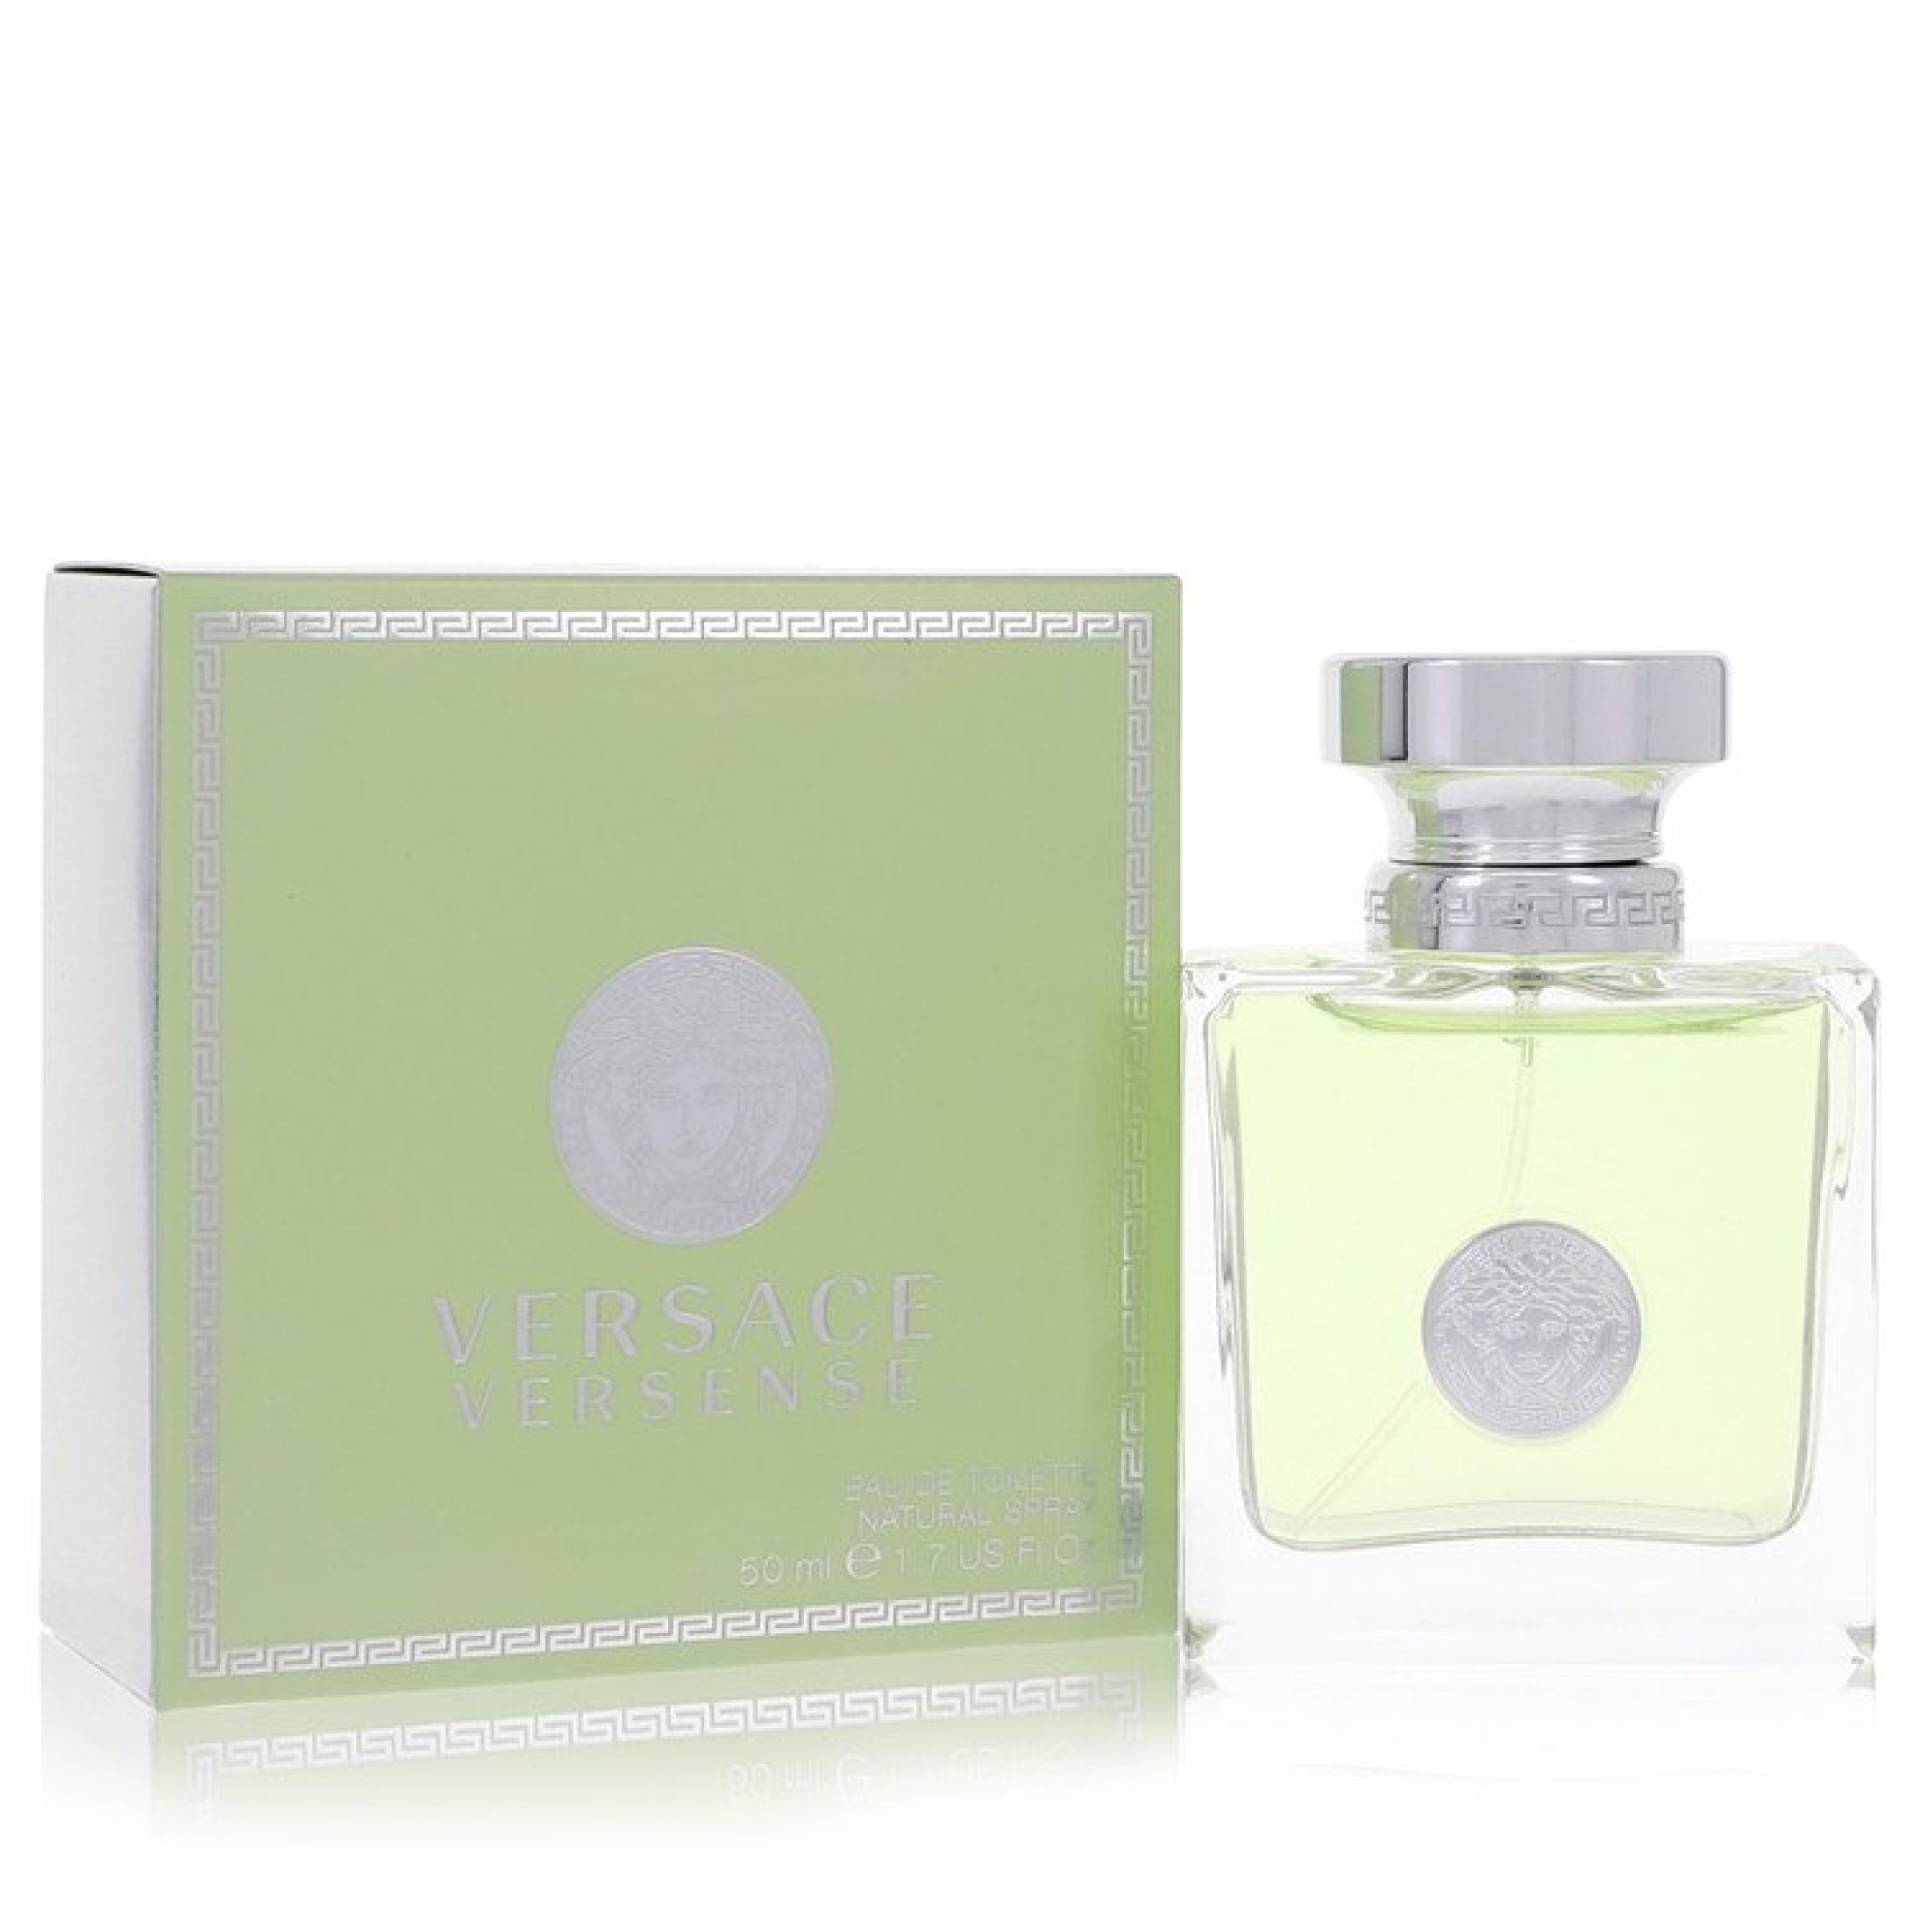 Versace Versense Eau De Toilette Spray 50 ml von Versace